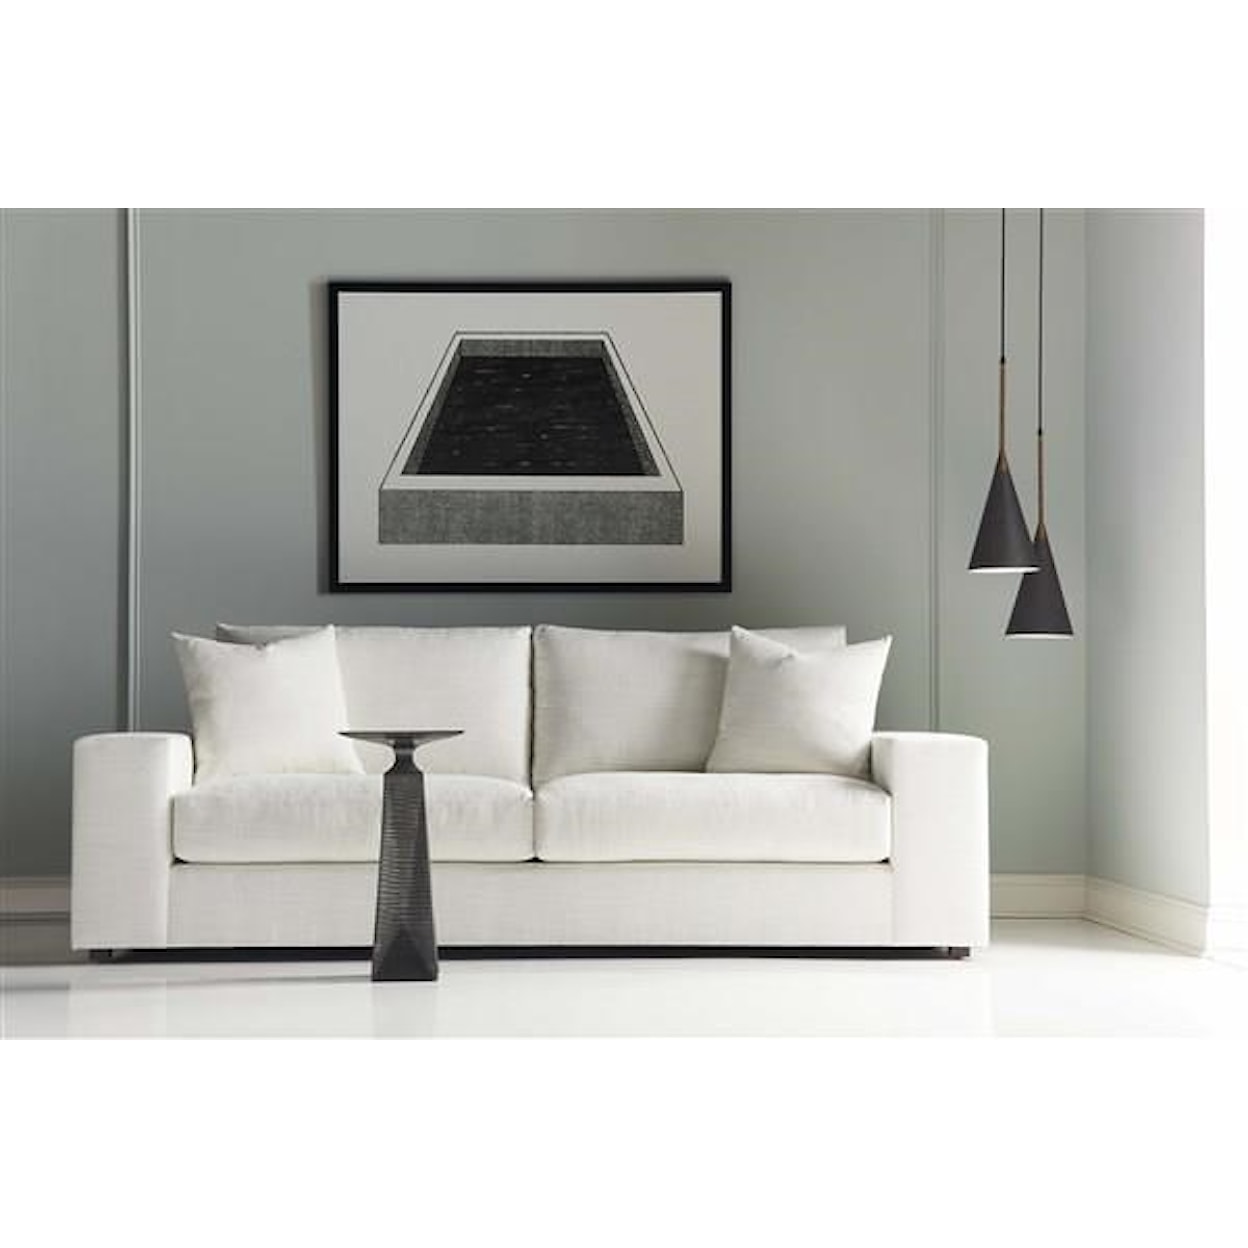 Vanguard Furniture Lucca - Ease Two Seat Sofa